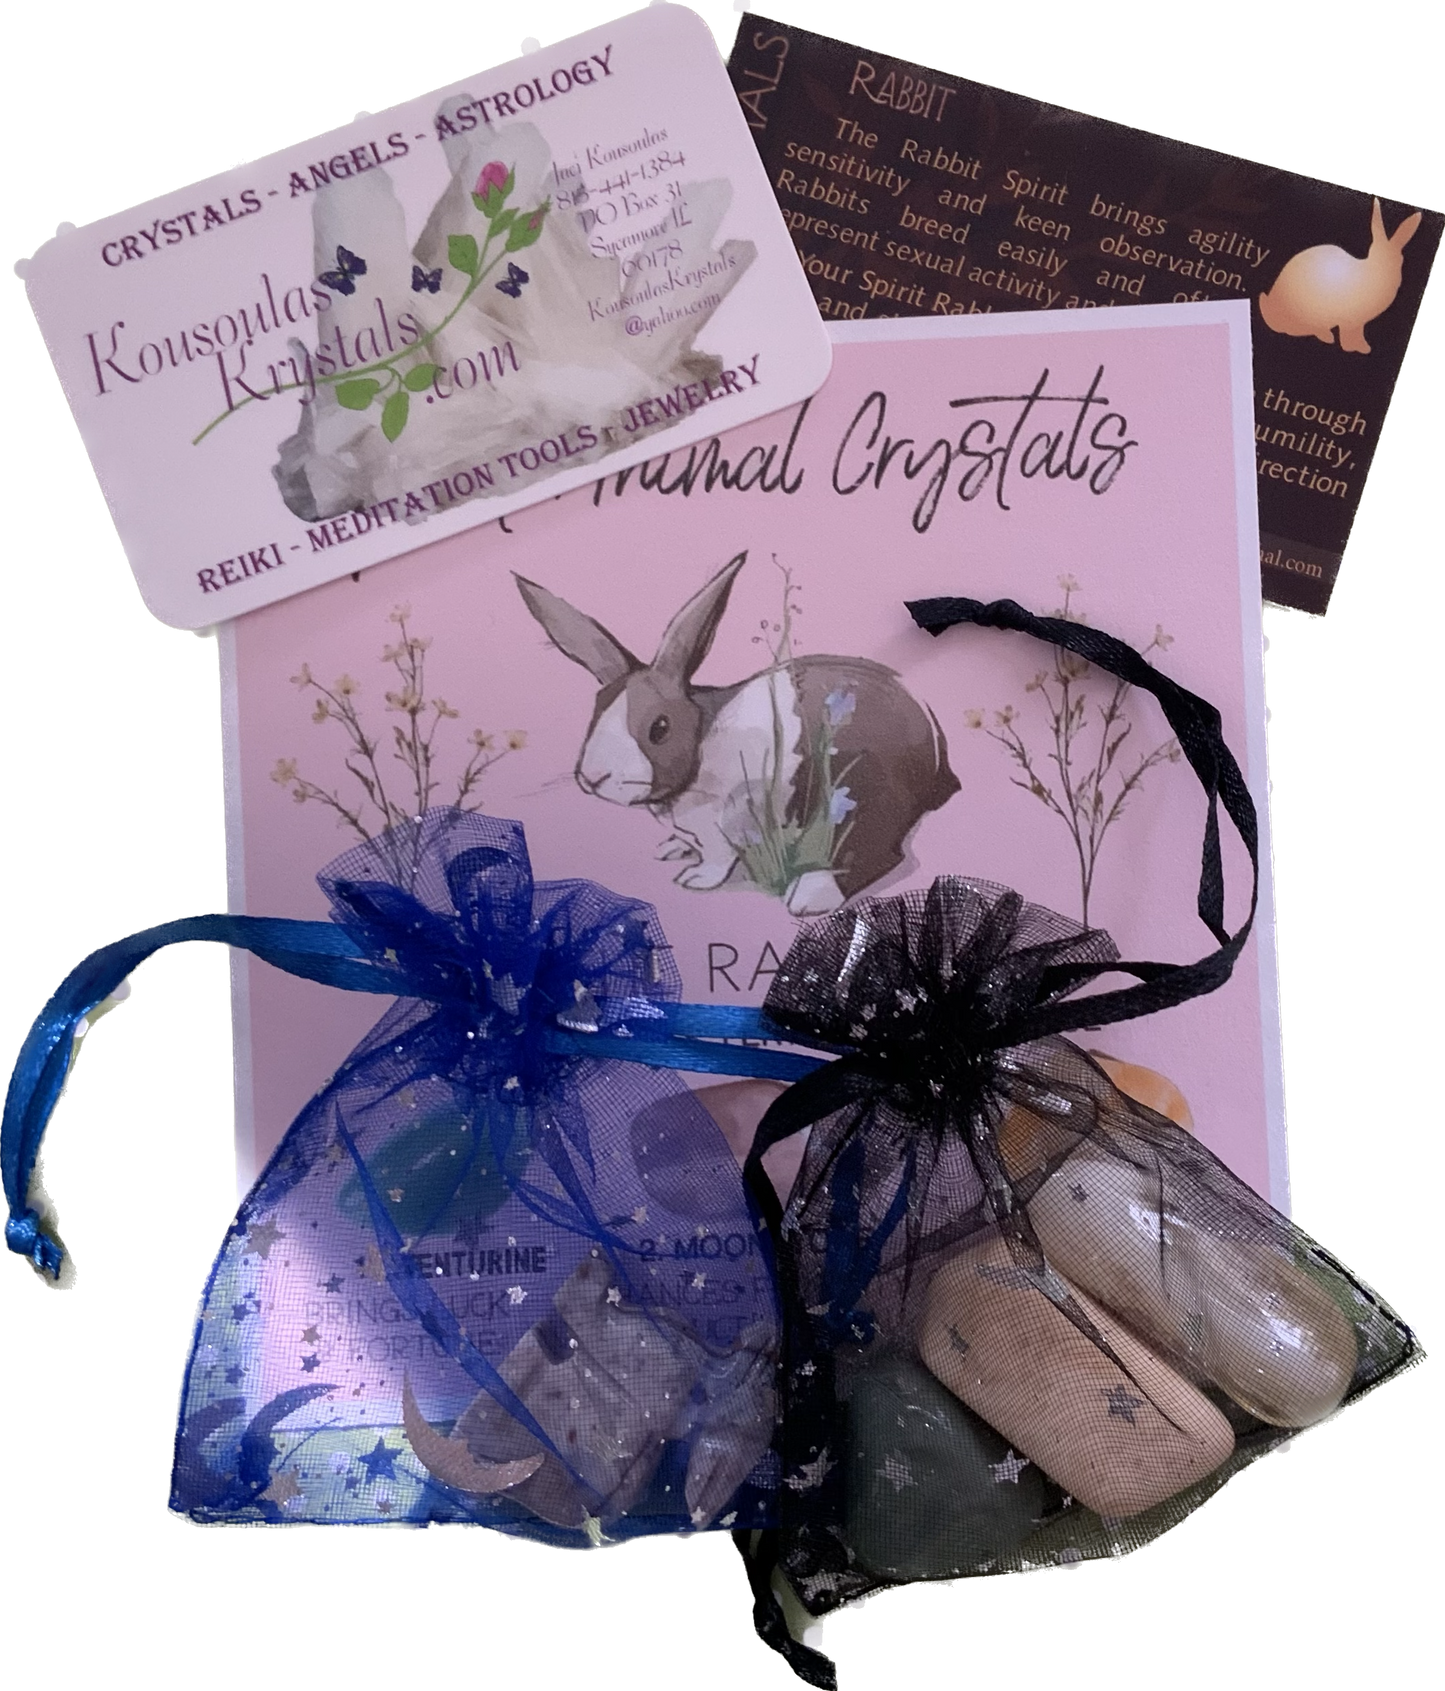 Spirit animal crystal gift set - The Rabbit